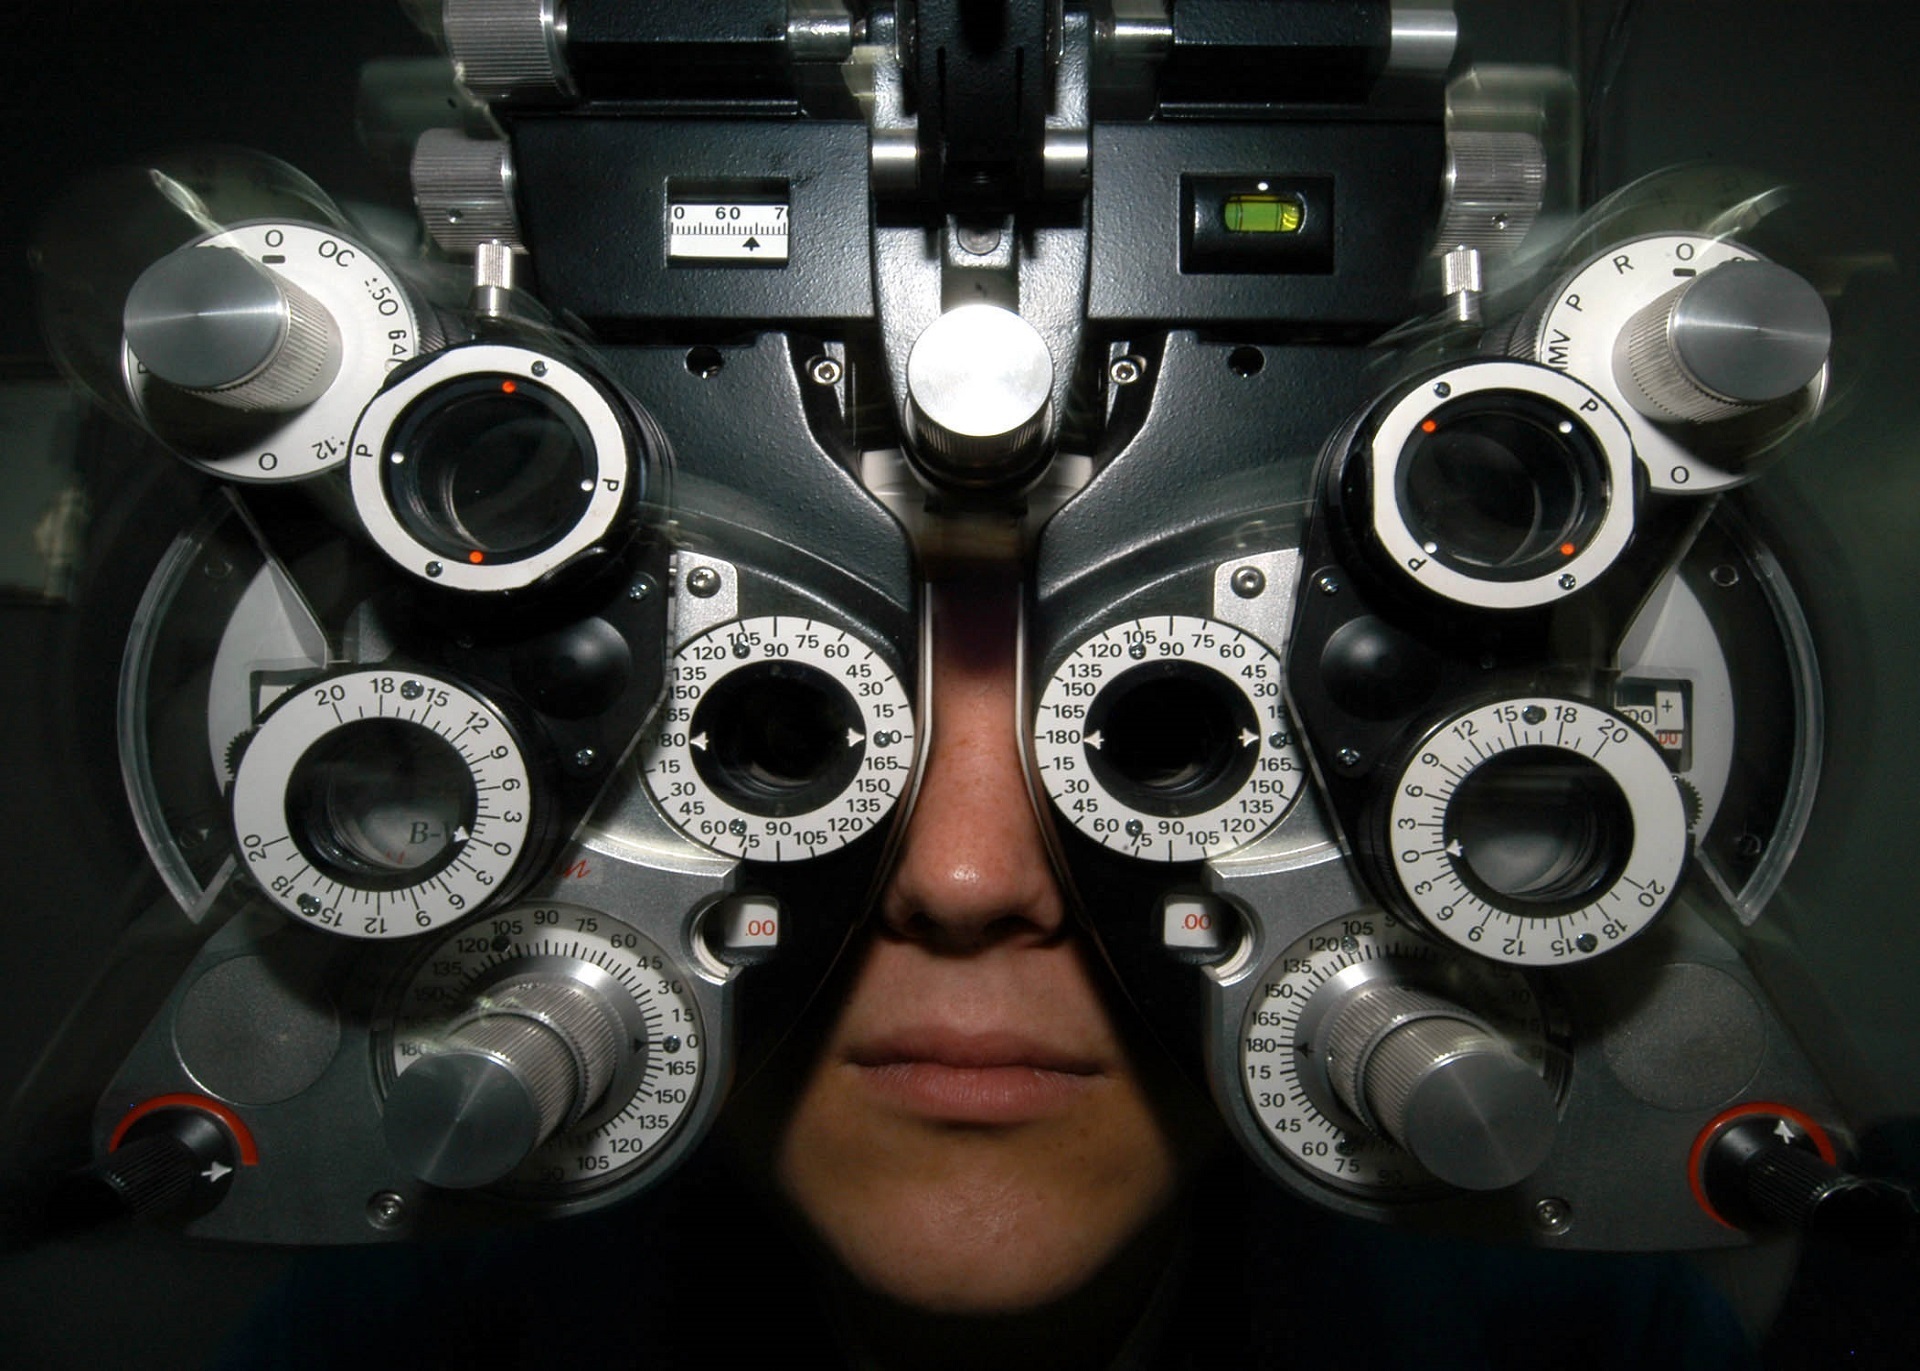 demencia Oftalmología alzheimer examen ojos vista deteccion temprana